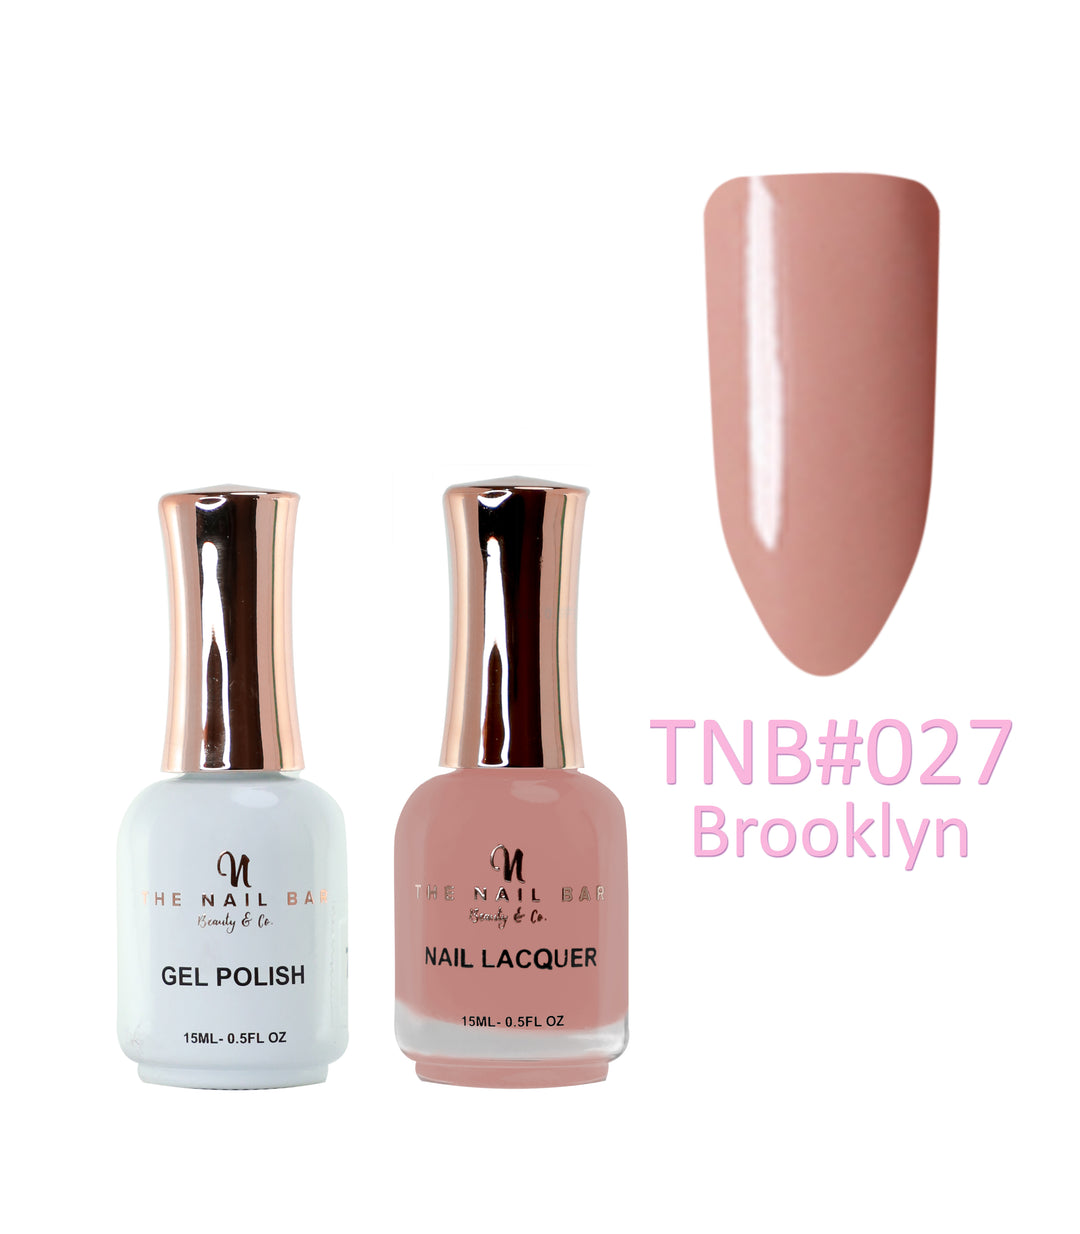 Dual Polish/Gel colour matching (15ml) - Brooklyn - The Nail Bar Beauty & Co.